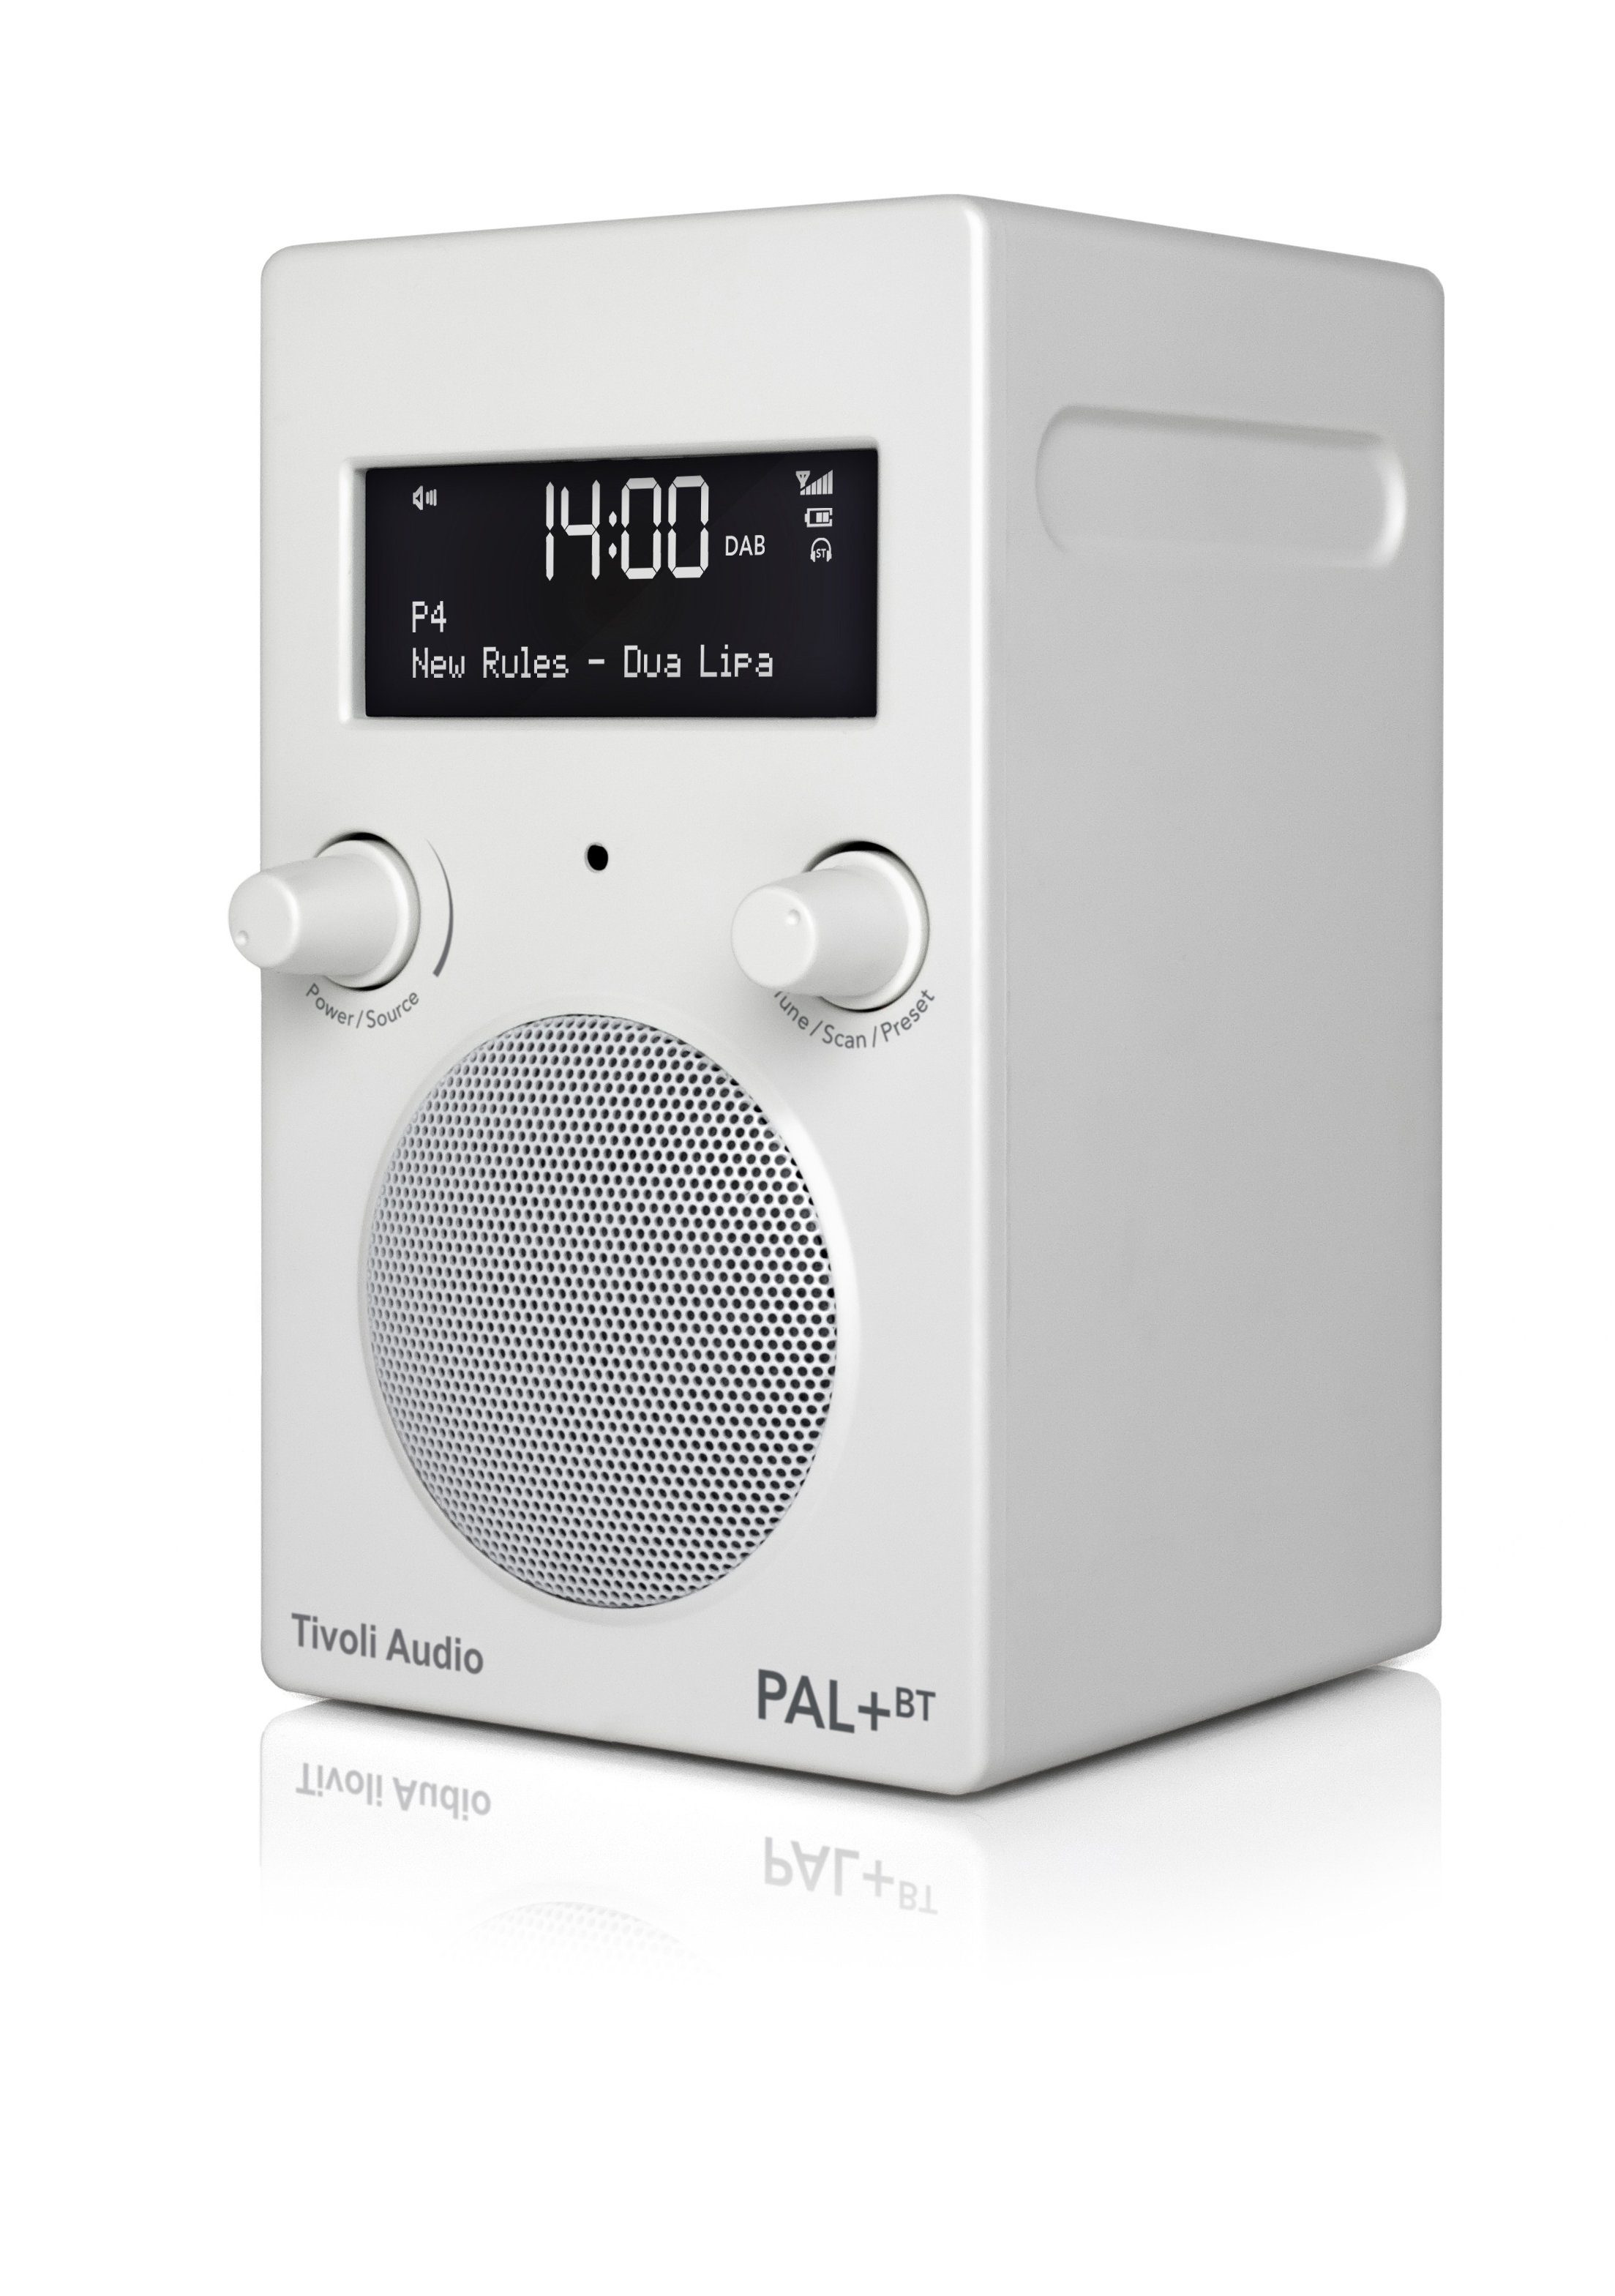 Gehäuse, Weiss Digitalradio wasserabweisendes FM-Tuner, Bluetooth) Küchen-Radio, (DAB) PAL+ tragbar, Tivoli (Digitalradio BT Audio (DAB),